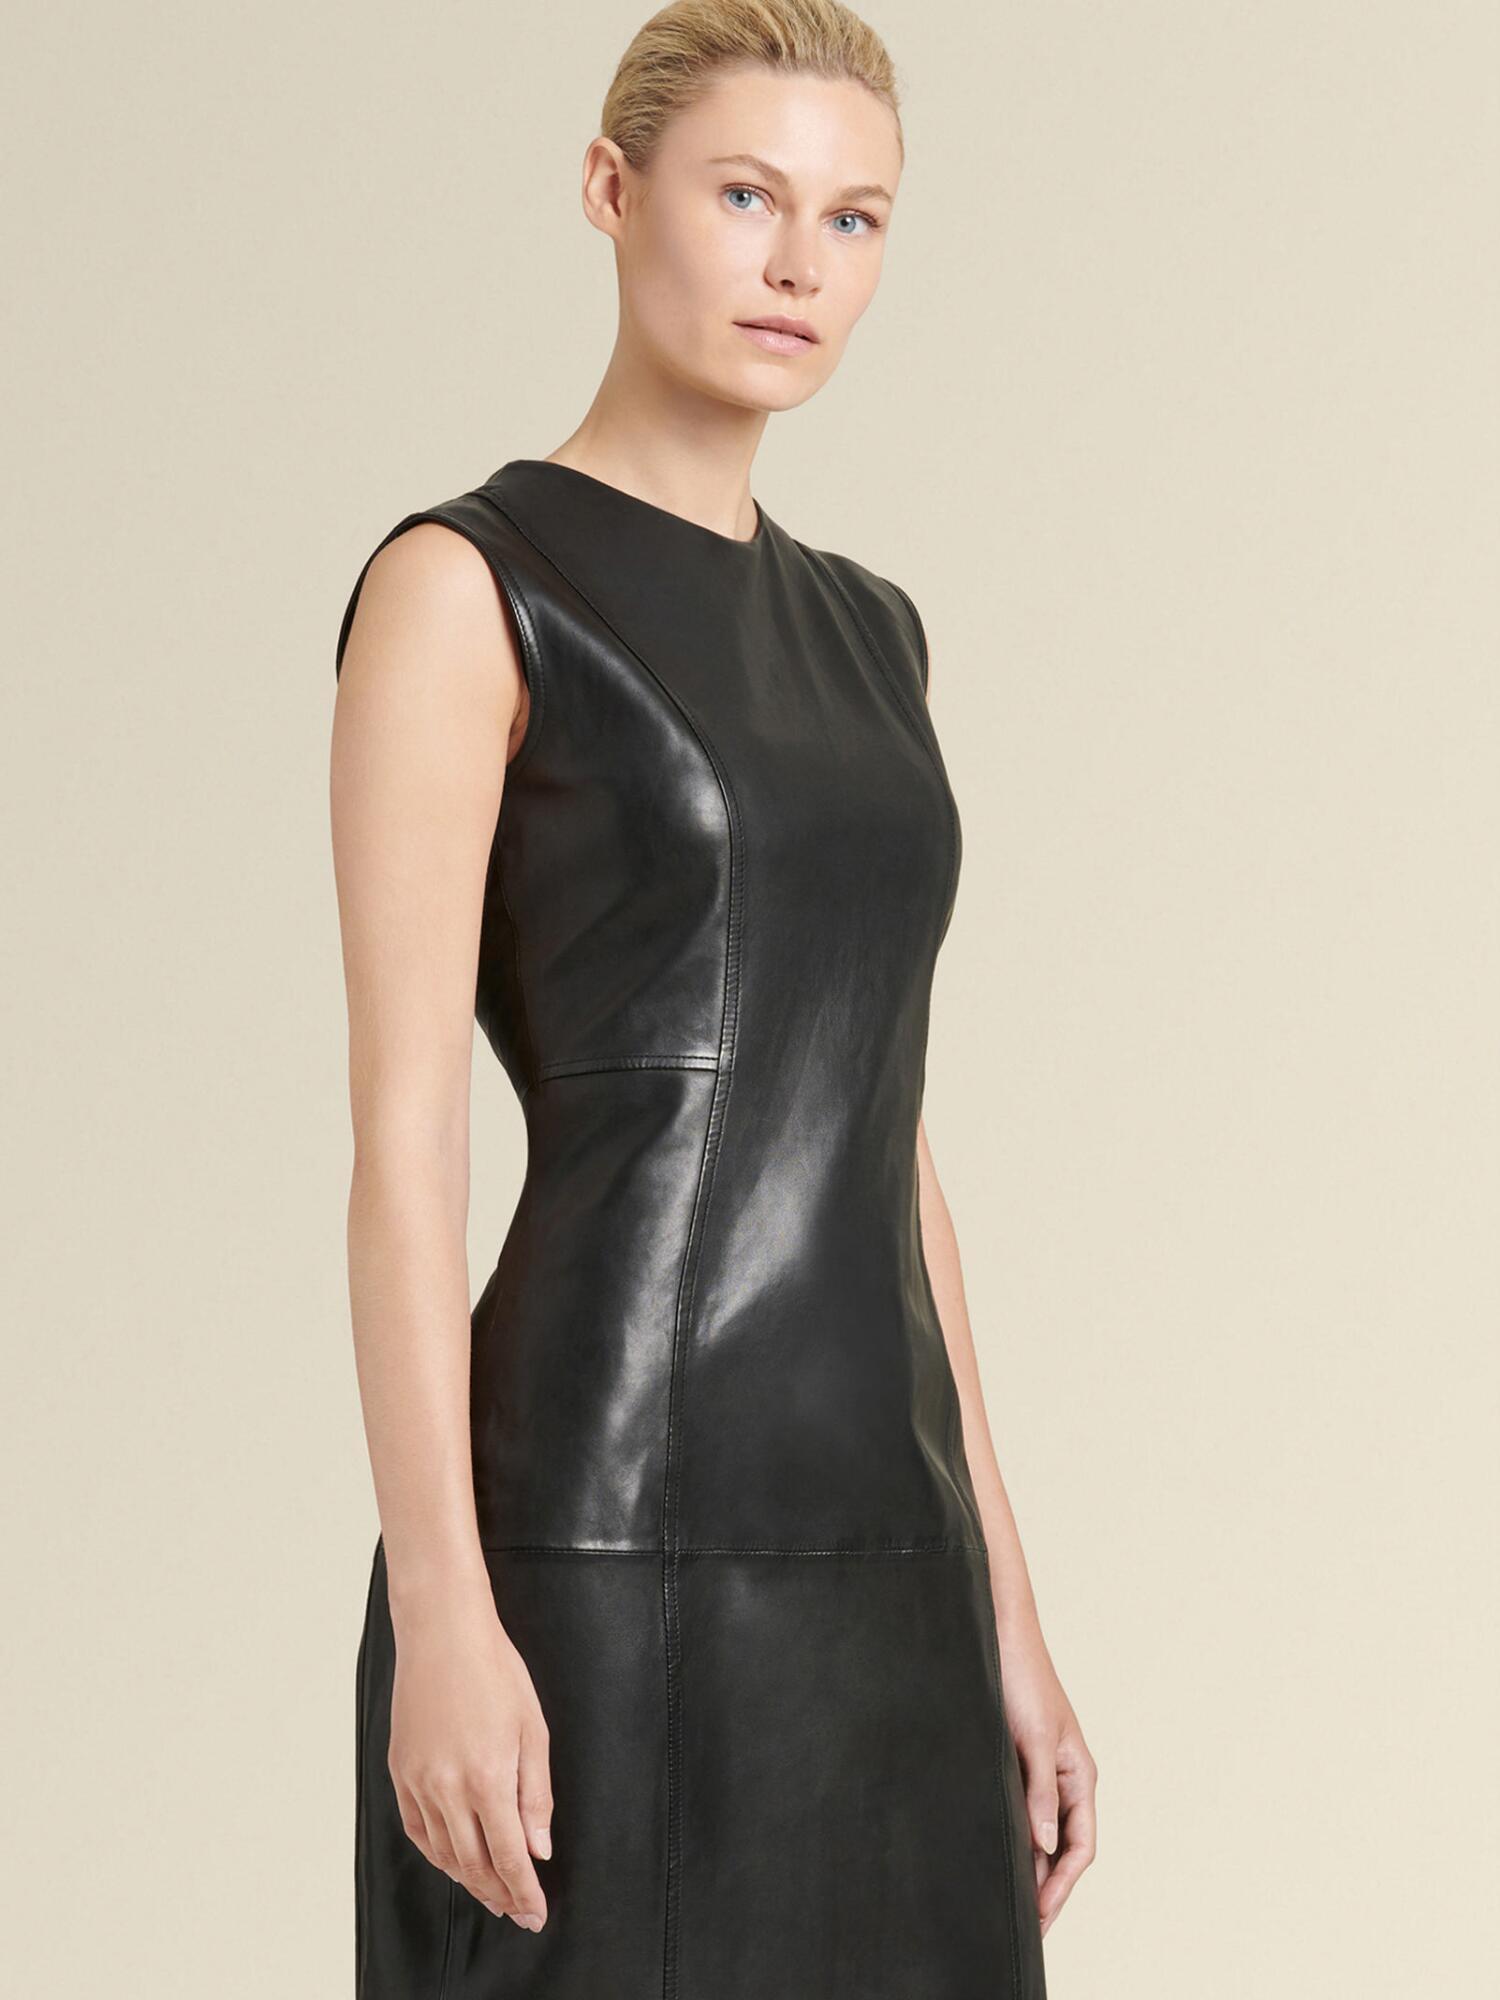 DKNY Donna Karan Sleeveless Leather Sheath Dress in Black - Lyst